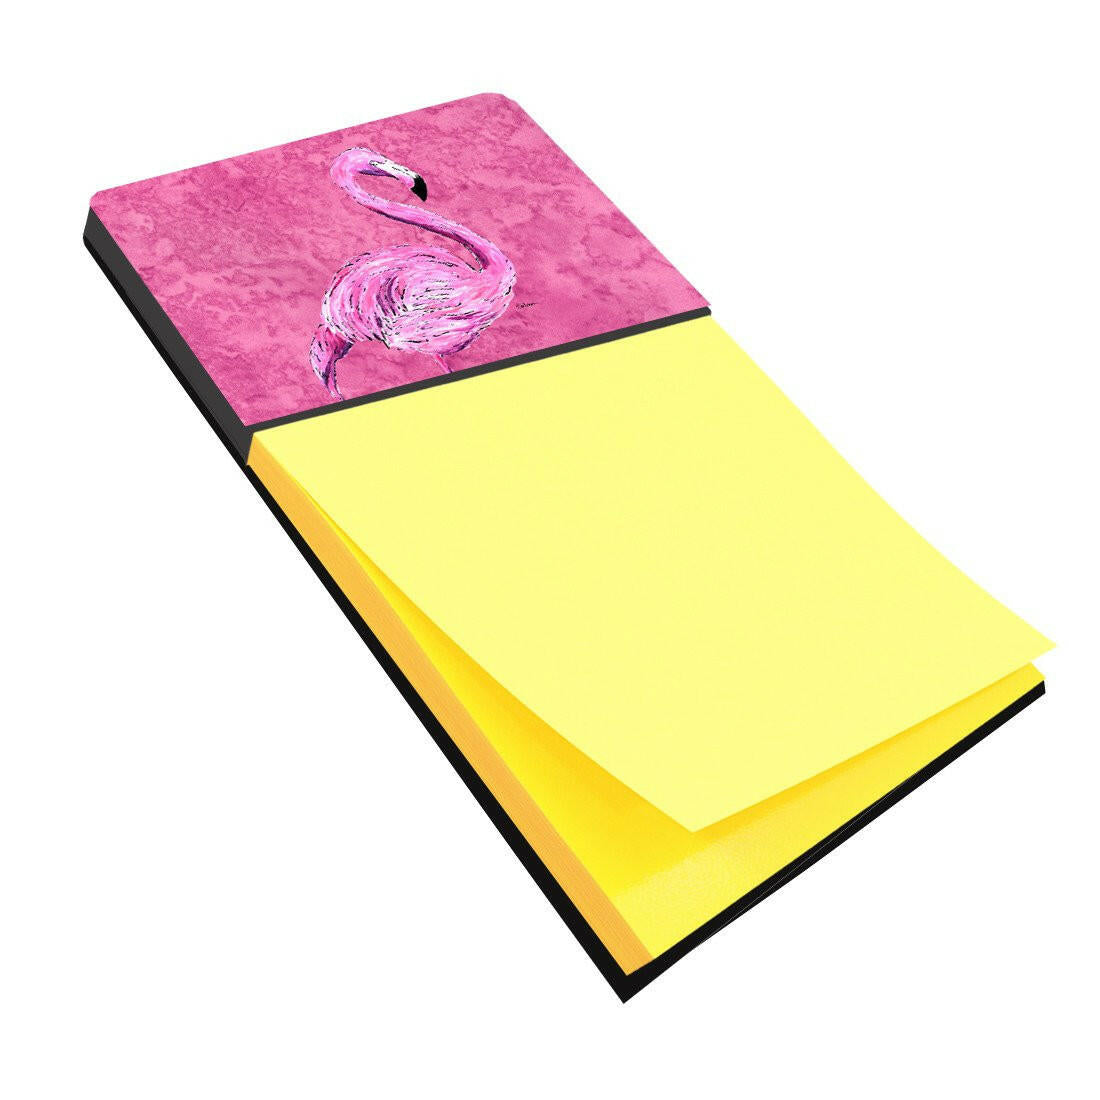 Flamingo on Pink Refiillable Sticky Note Holder or Postit Note Dispenser 8875SN by Caroline's Treasures